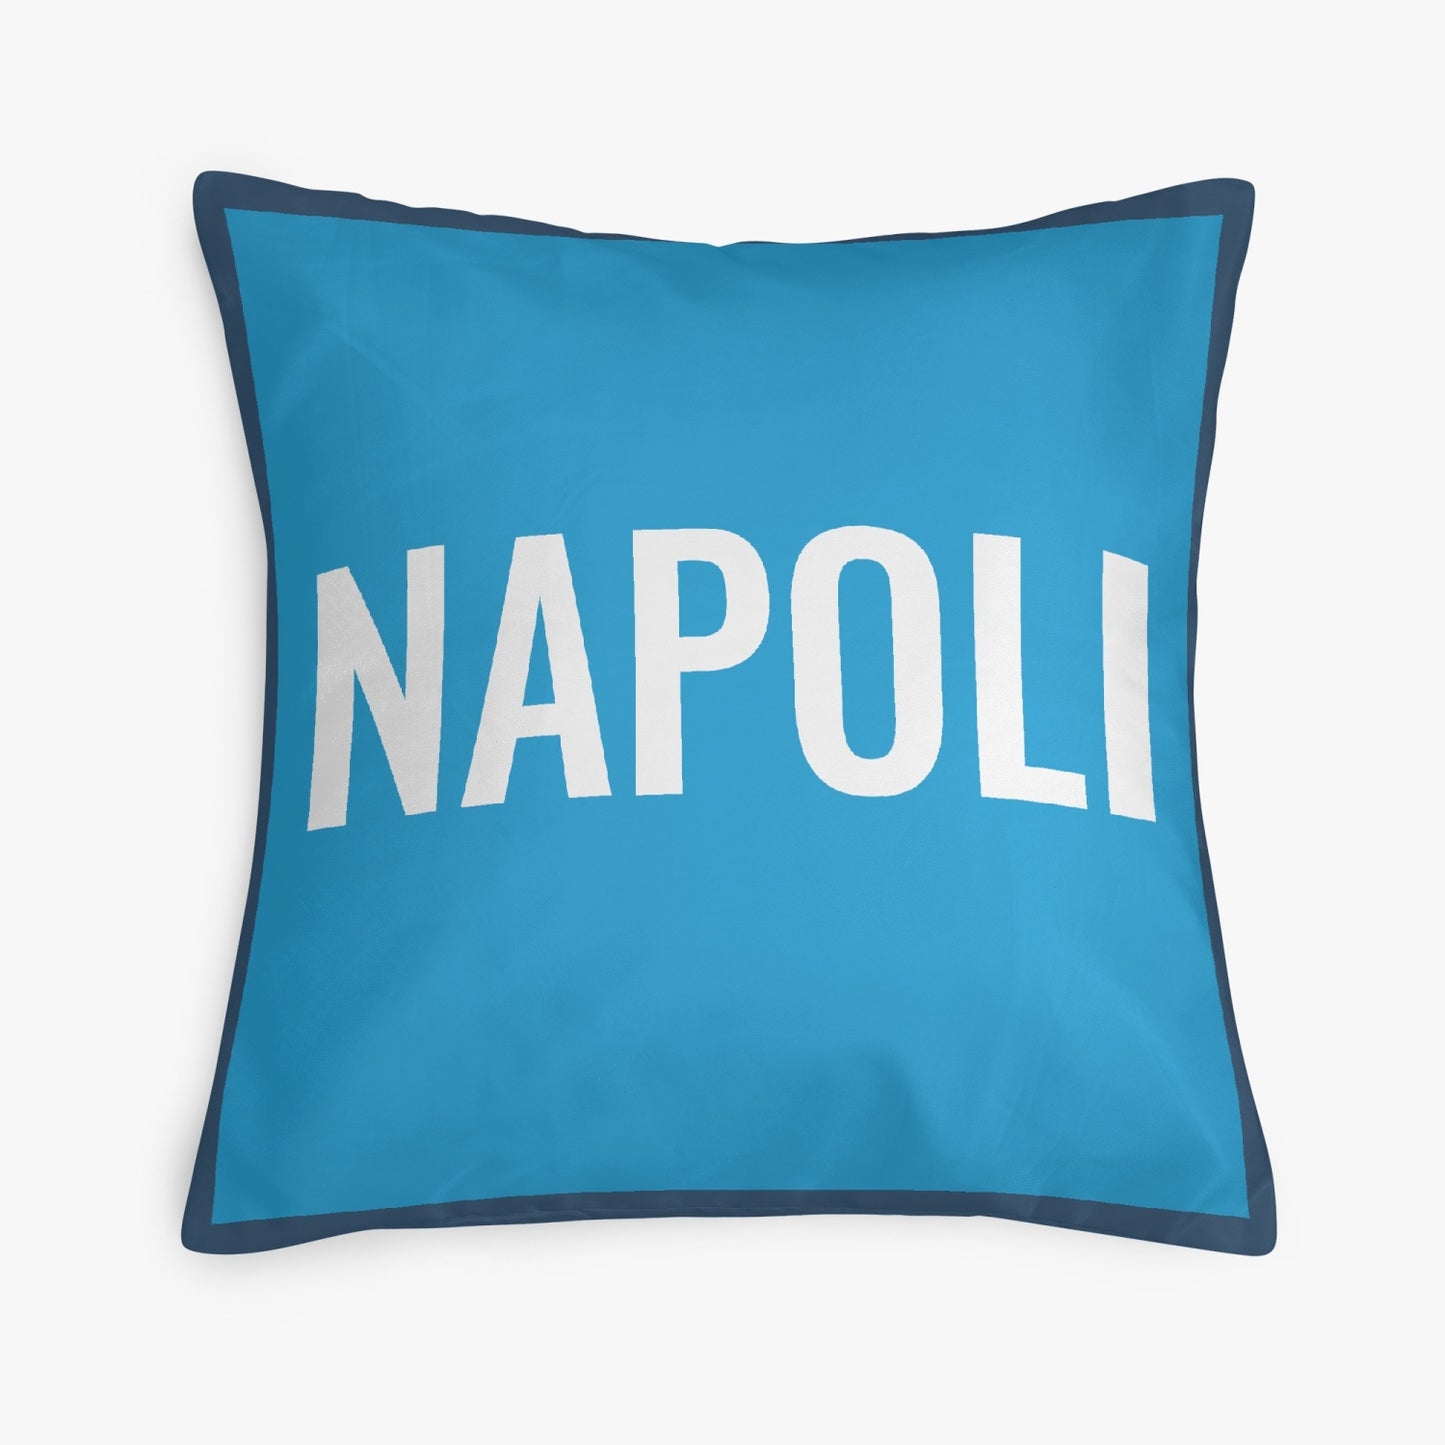 Napoli Pillow Cover